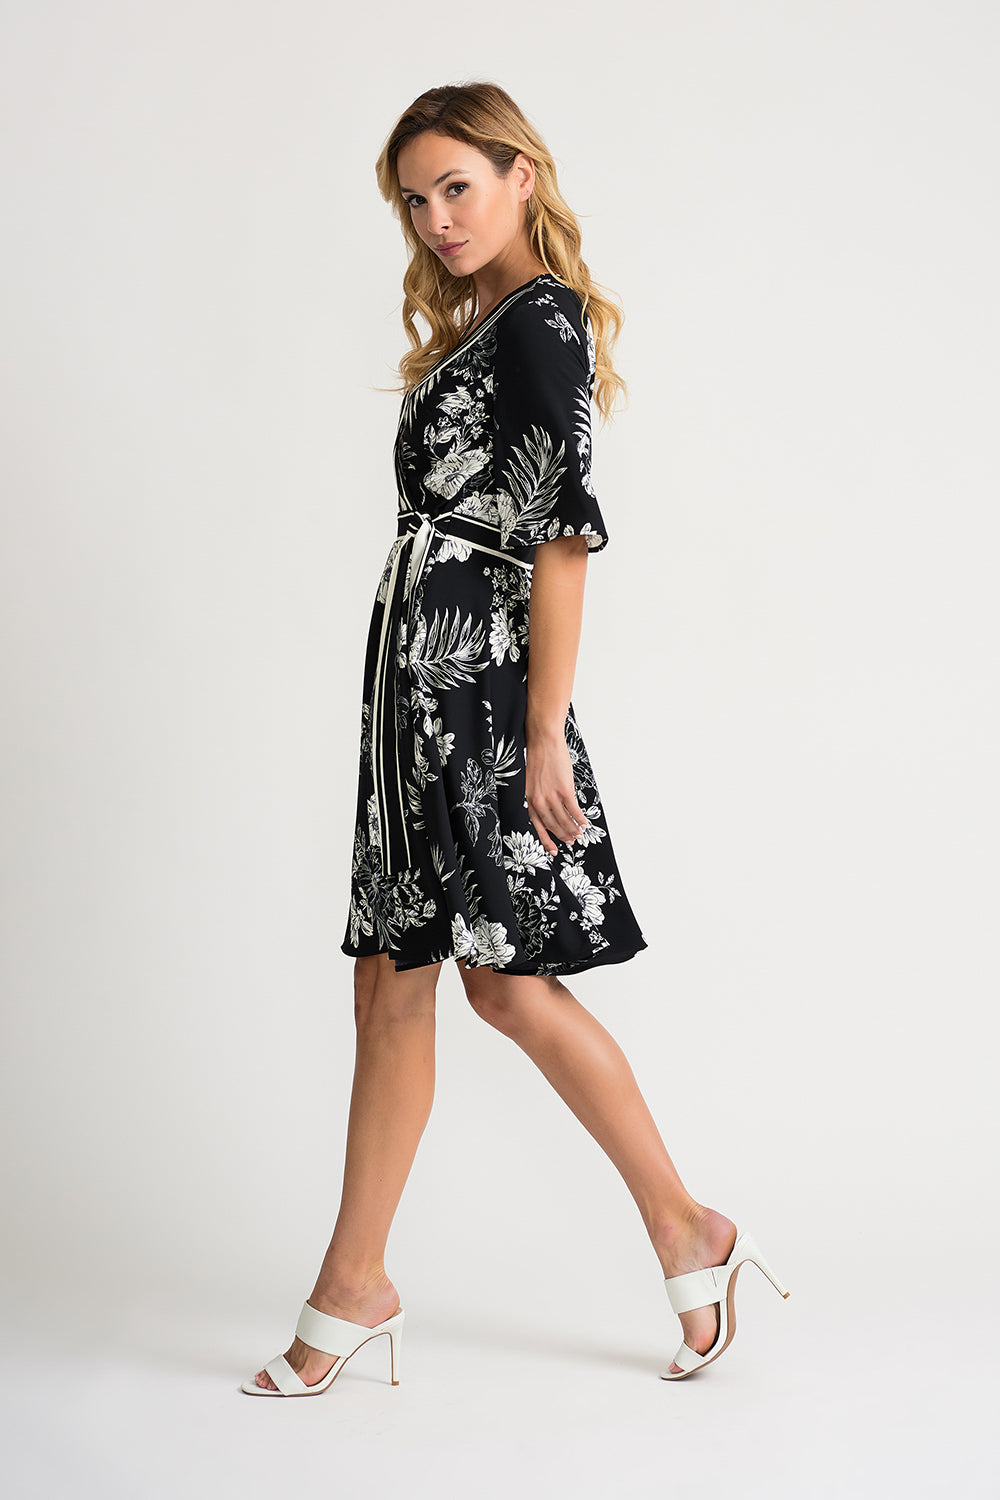 Joseph Ribkoff Black-Vanilla Dress Style 202119